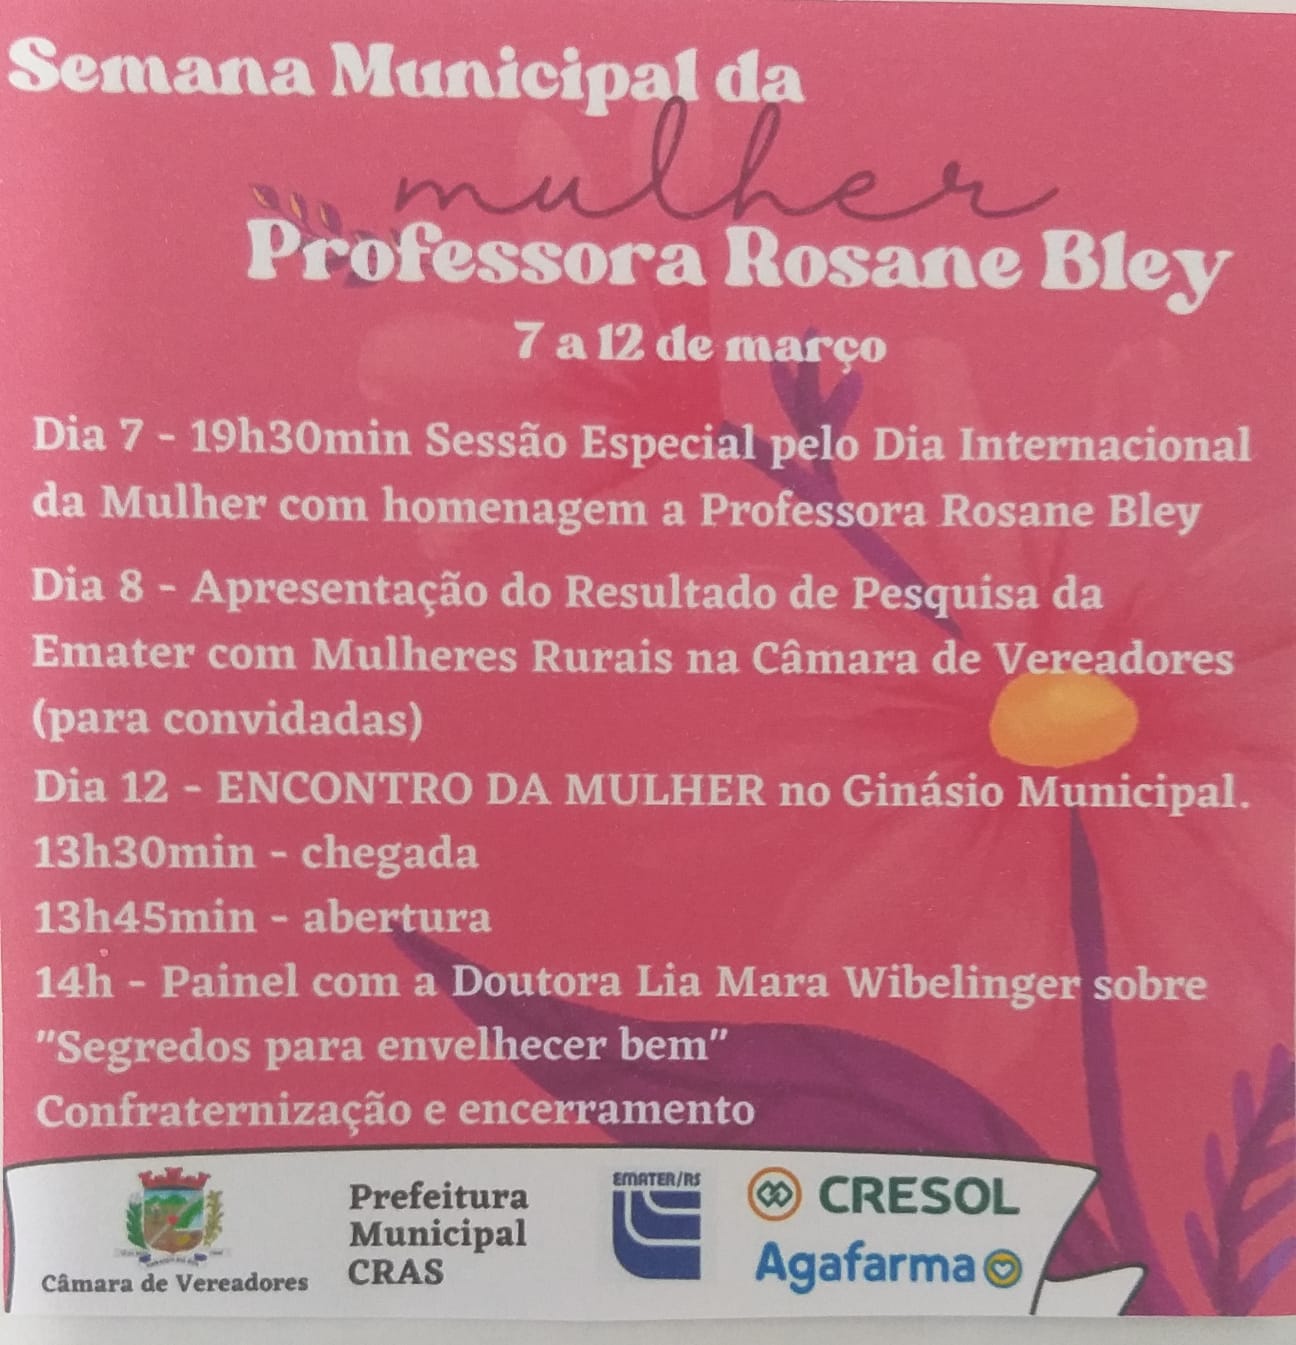 Semana Municipal da Mulher-Professora Rosane Bley